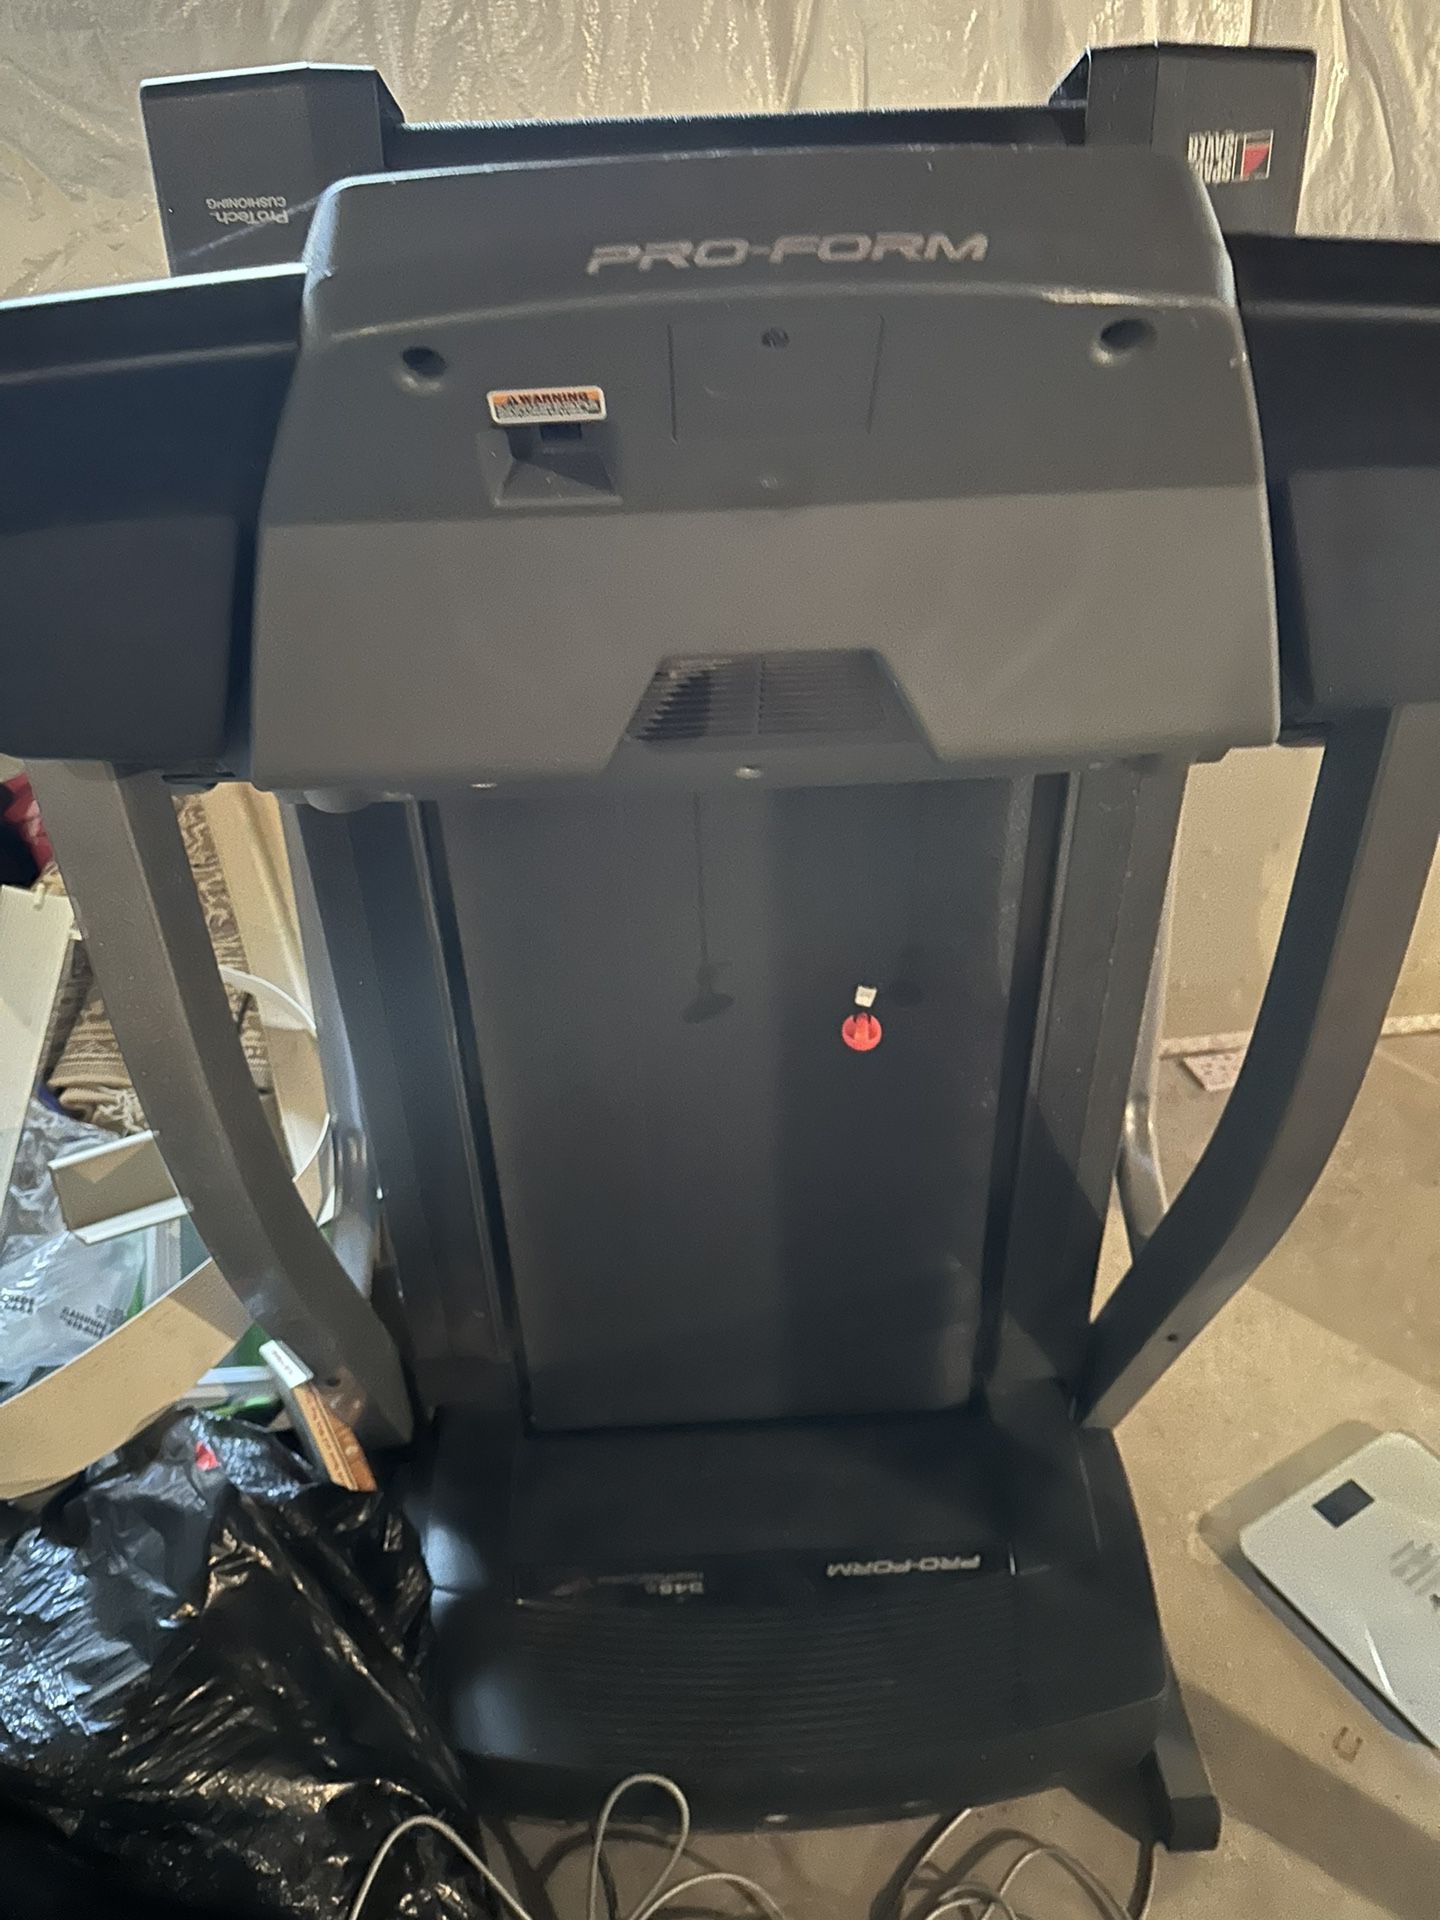 Pro Form treadmill (needs new motor) 